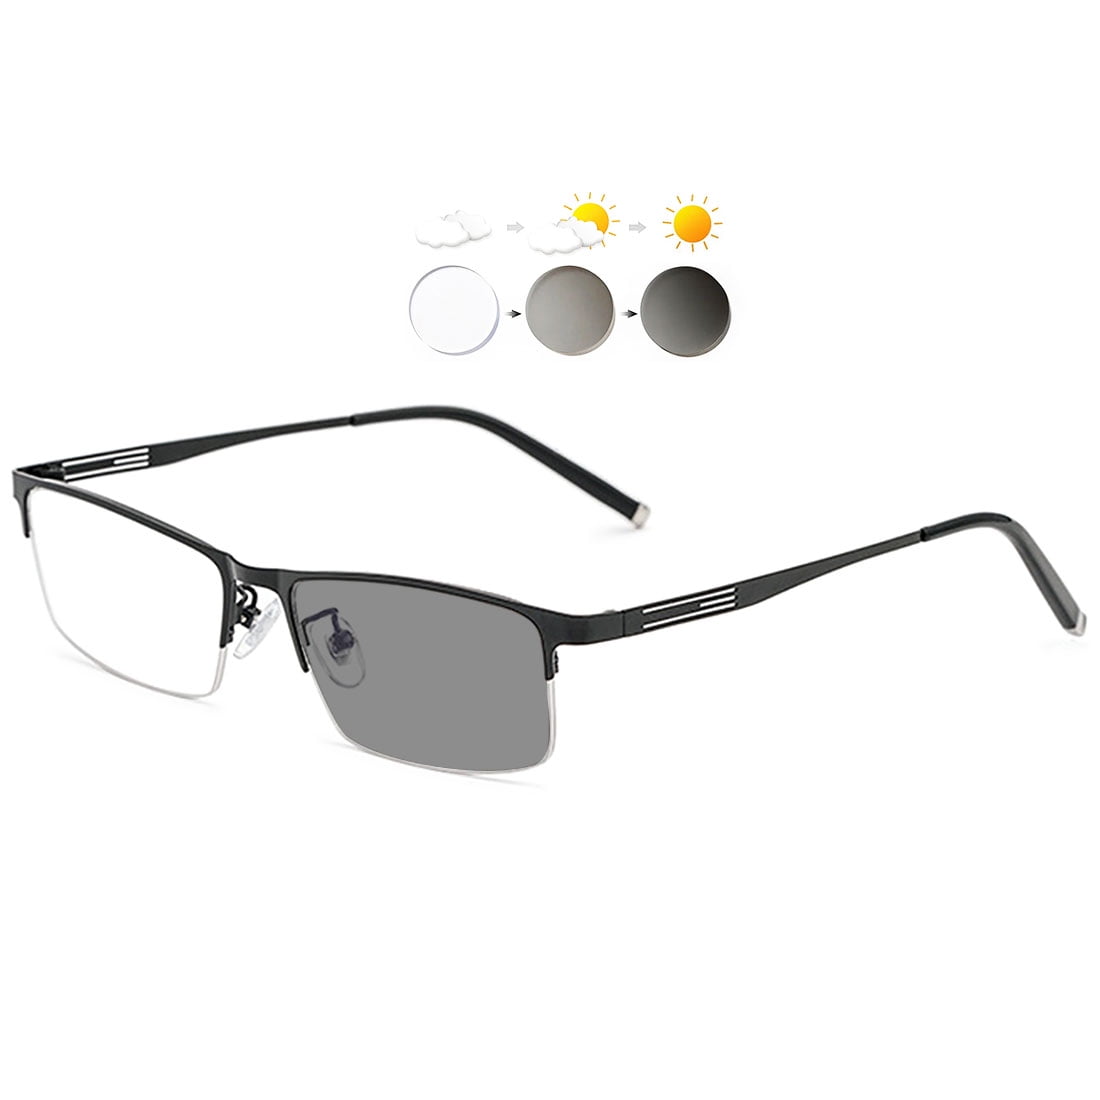 KOOSUFA Mens Transition Photochromic Glasses for Driving Outdoor  Lightweight Half Frame Metal Eyewear Eyeglasses with UV Protection 2 in 1  Lenses Darken In Sunlight, Grey 